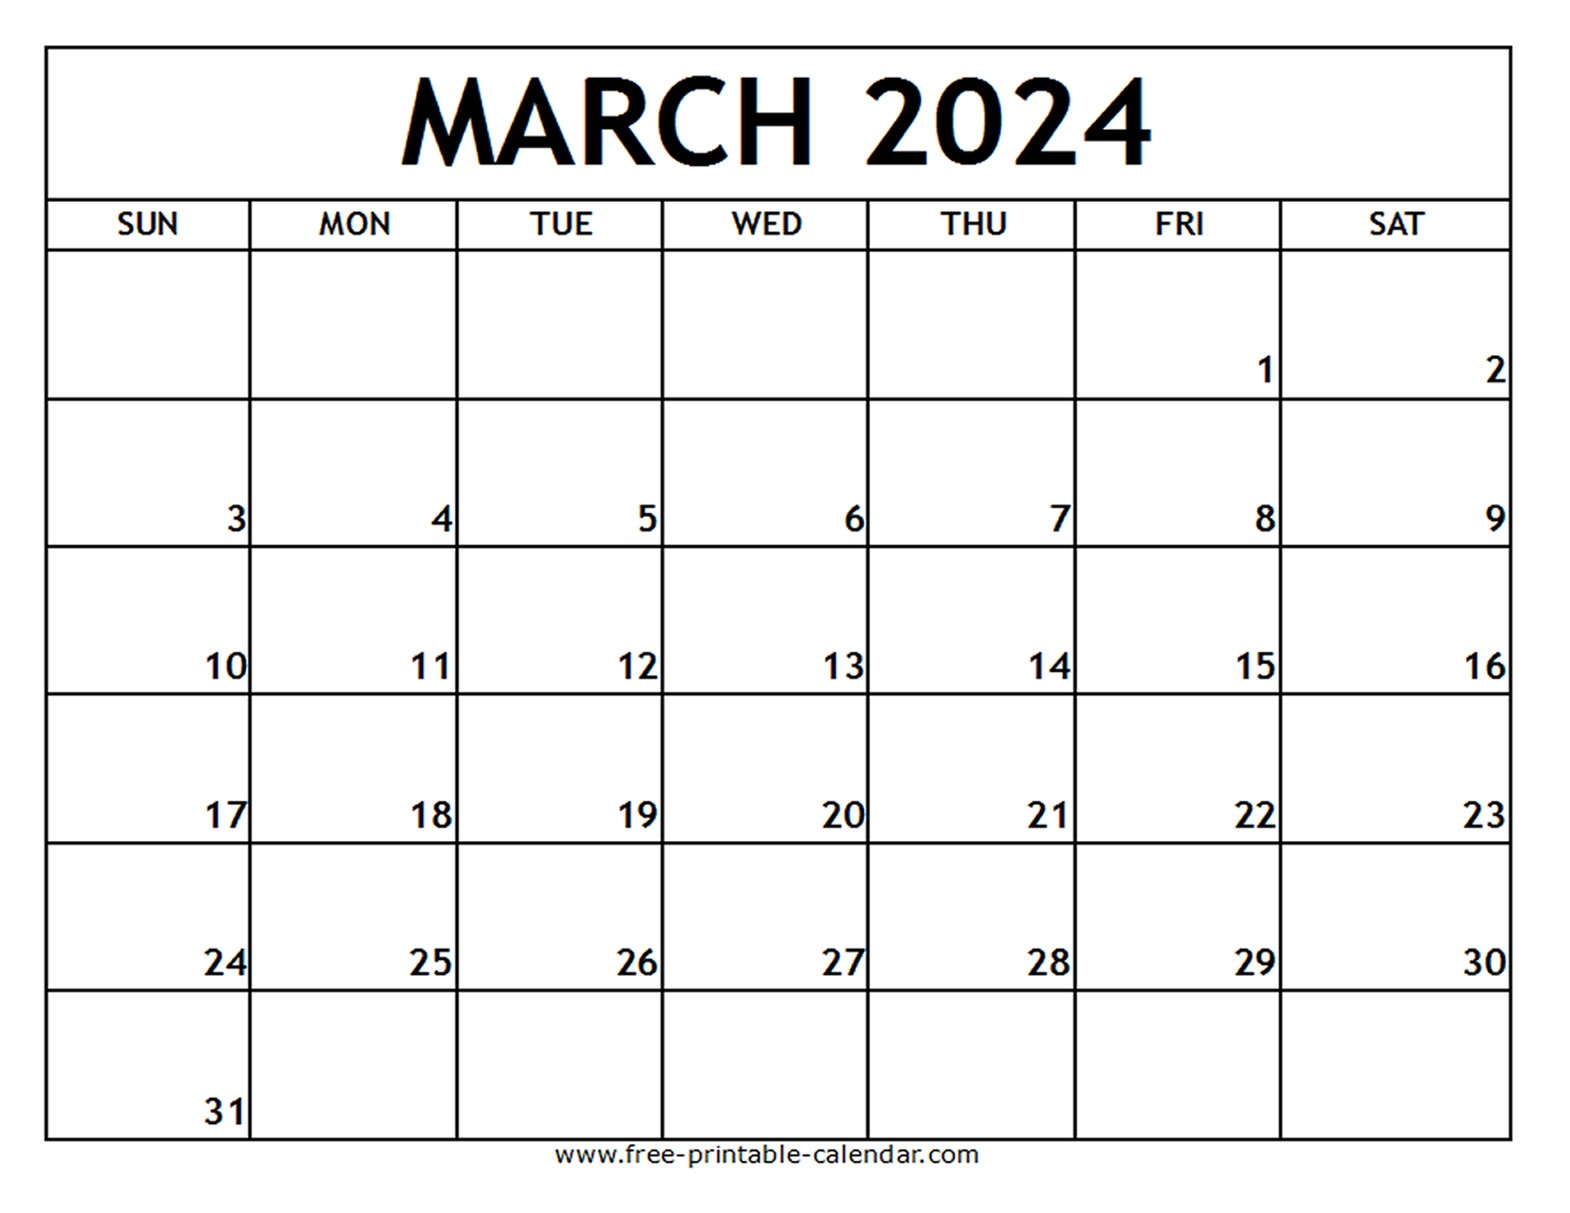 March 2024 Printable Calendar - Free-Printable-Calendar with regard to Free Printable Blank Calendar March 2024